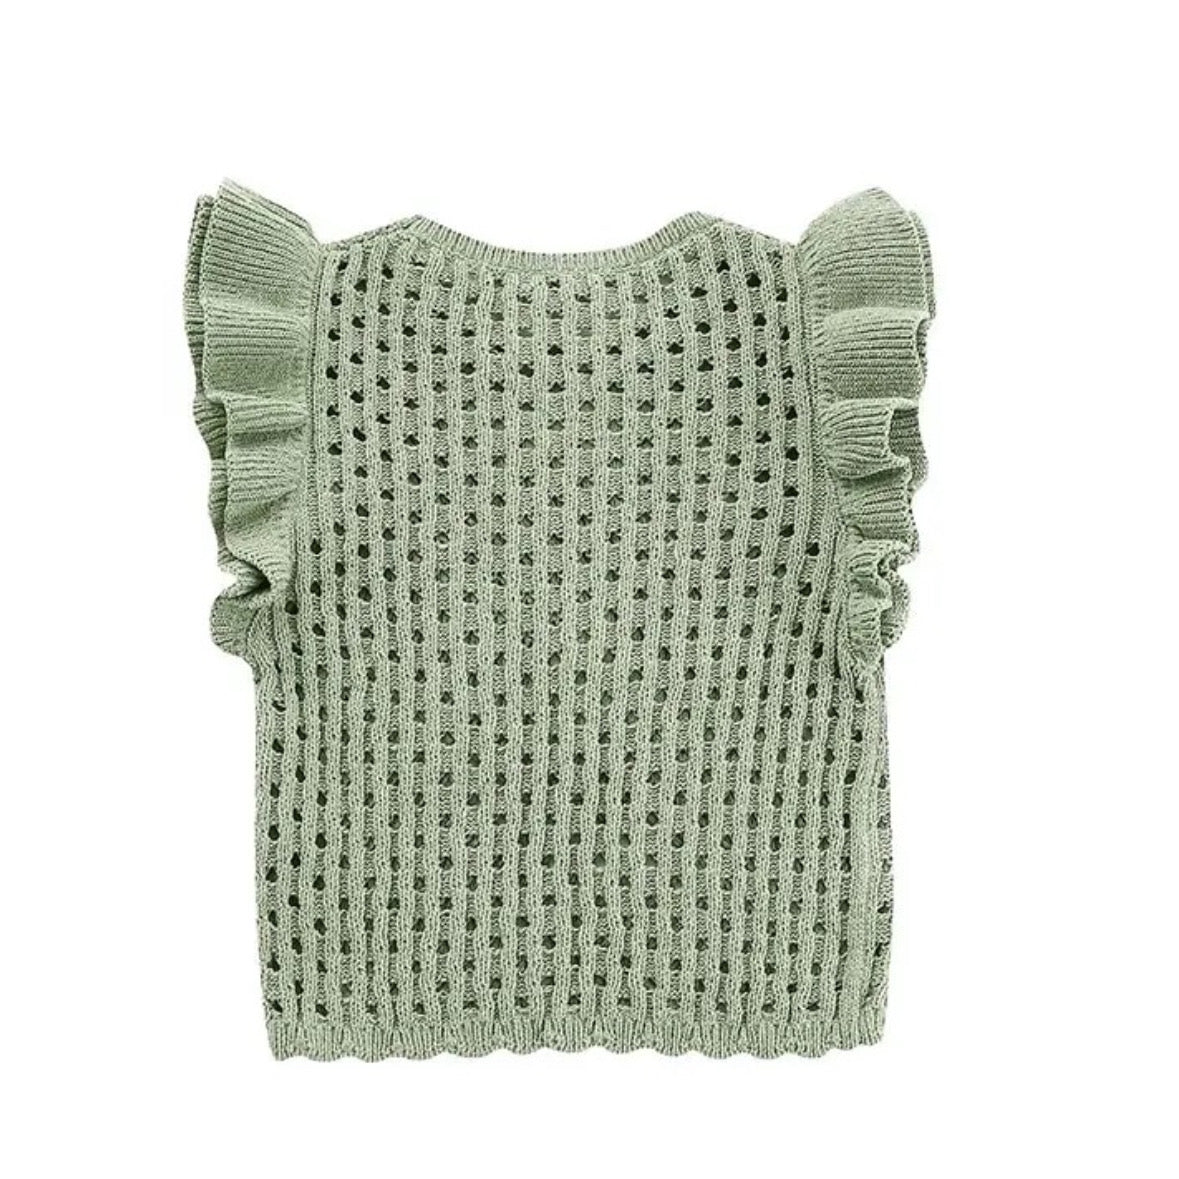 Matcha Green Knit Crochet Ruffle Sleeve Blouse Top